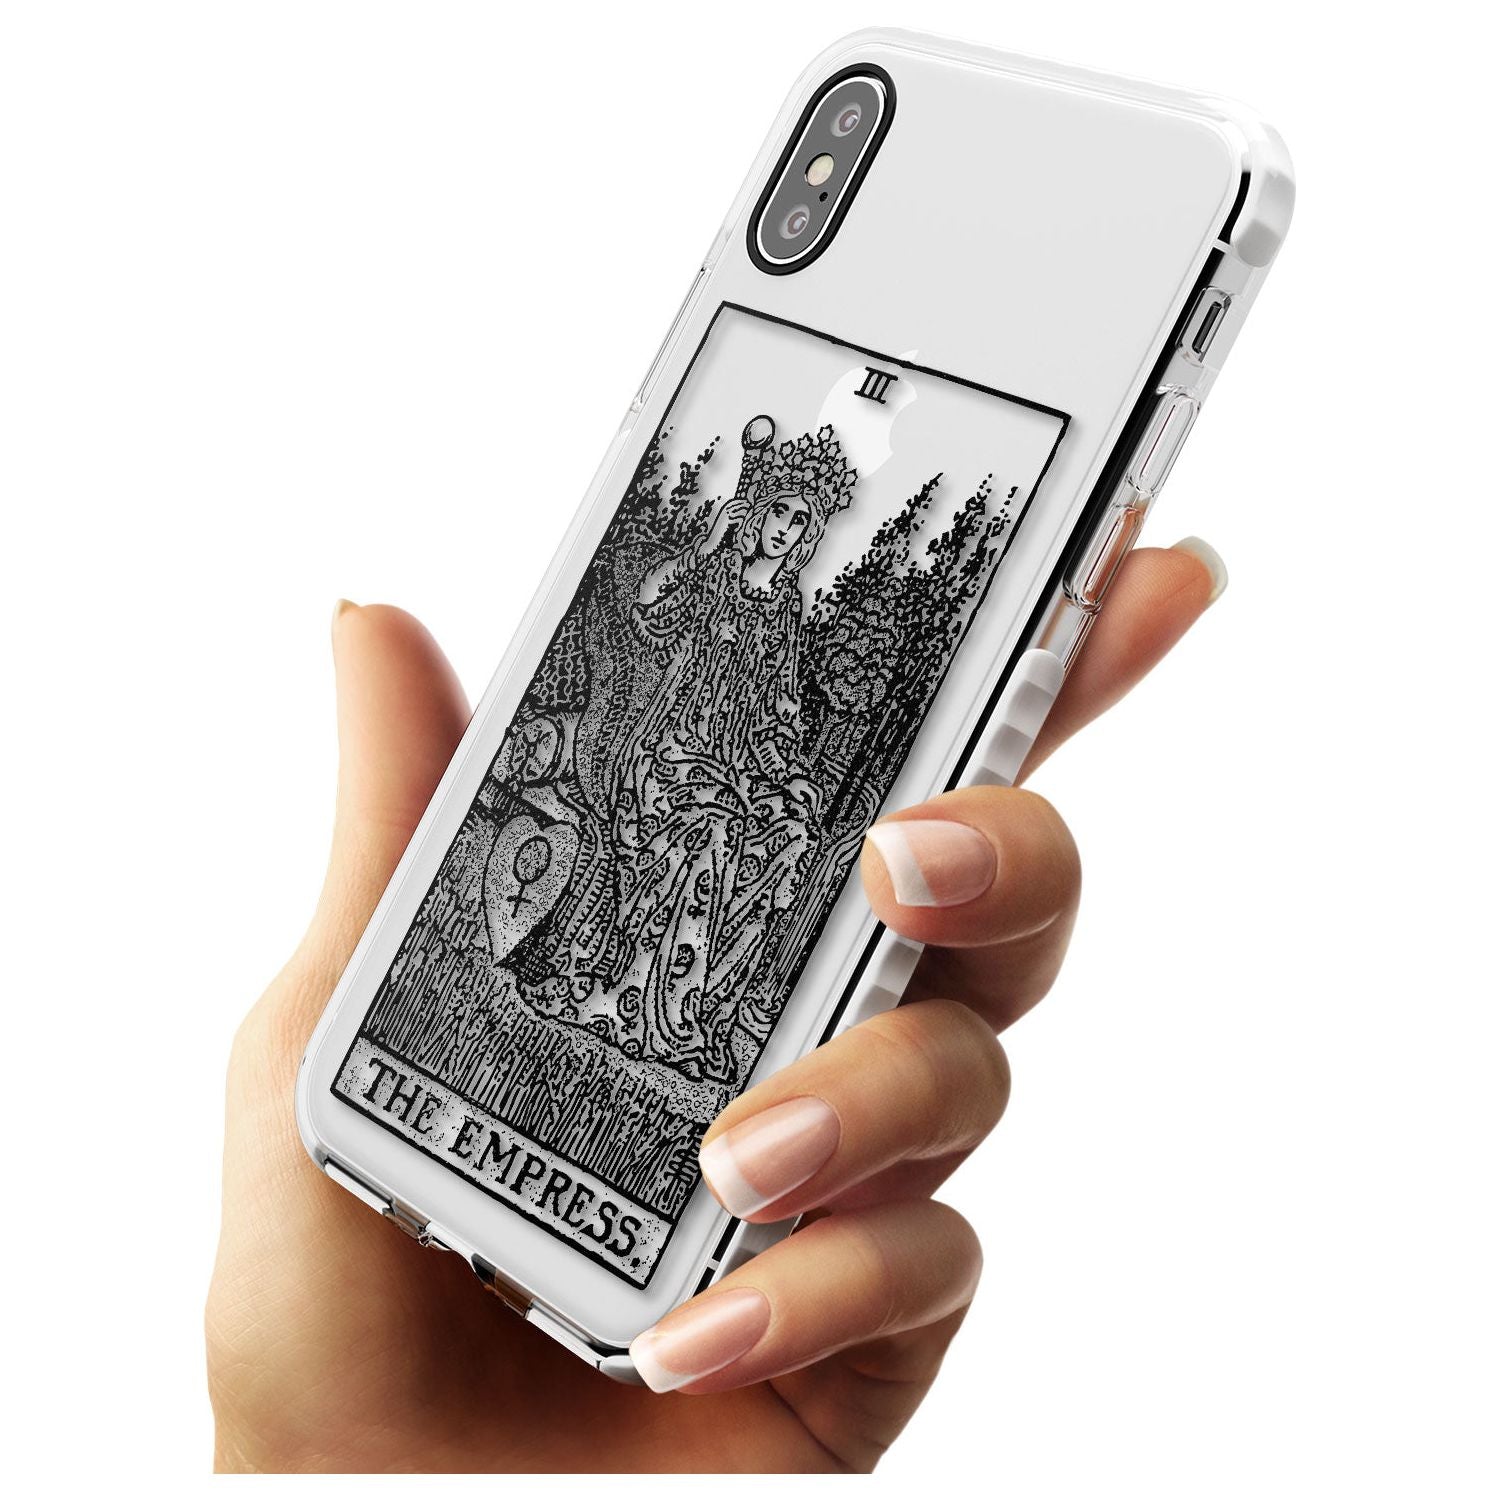 The Empress Tarot Card - Transparent Slim TPU Phone Case Warehouse X XS Max XR